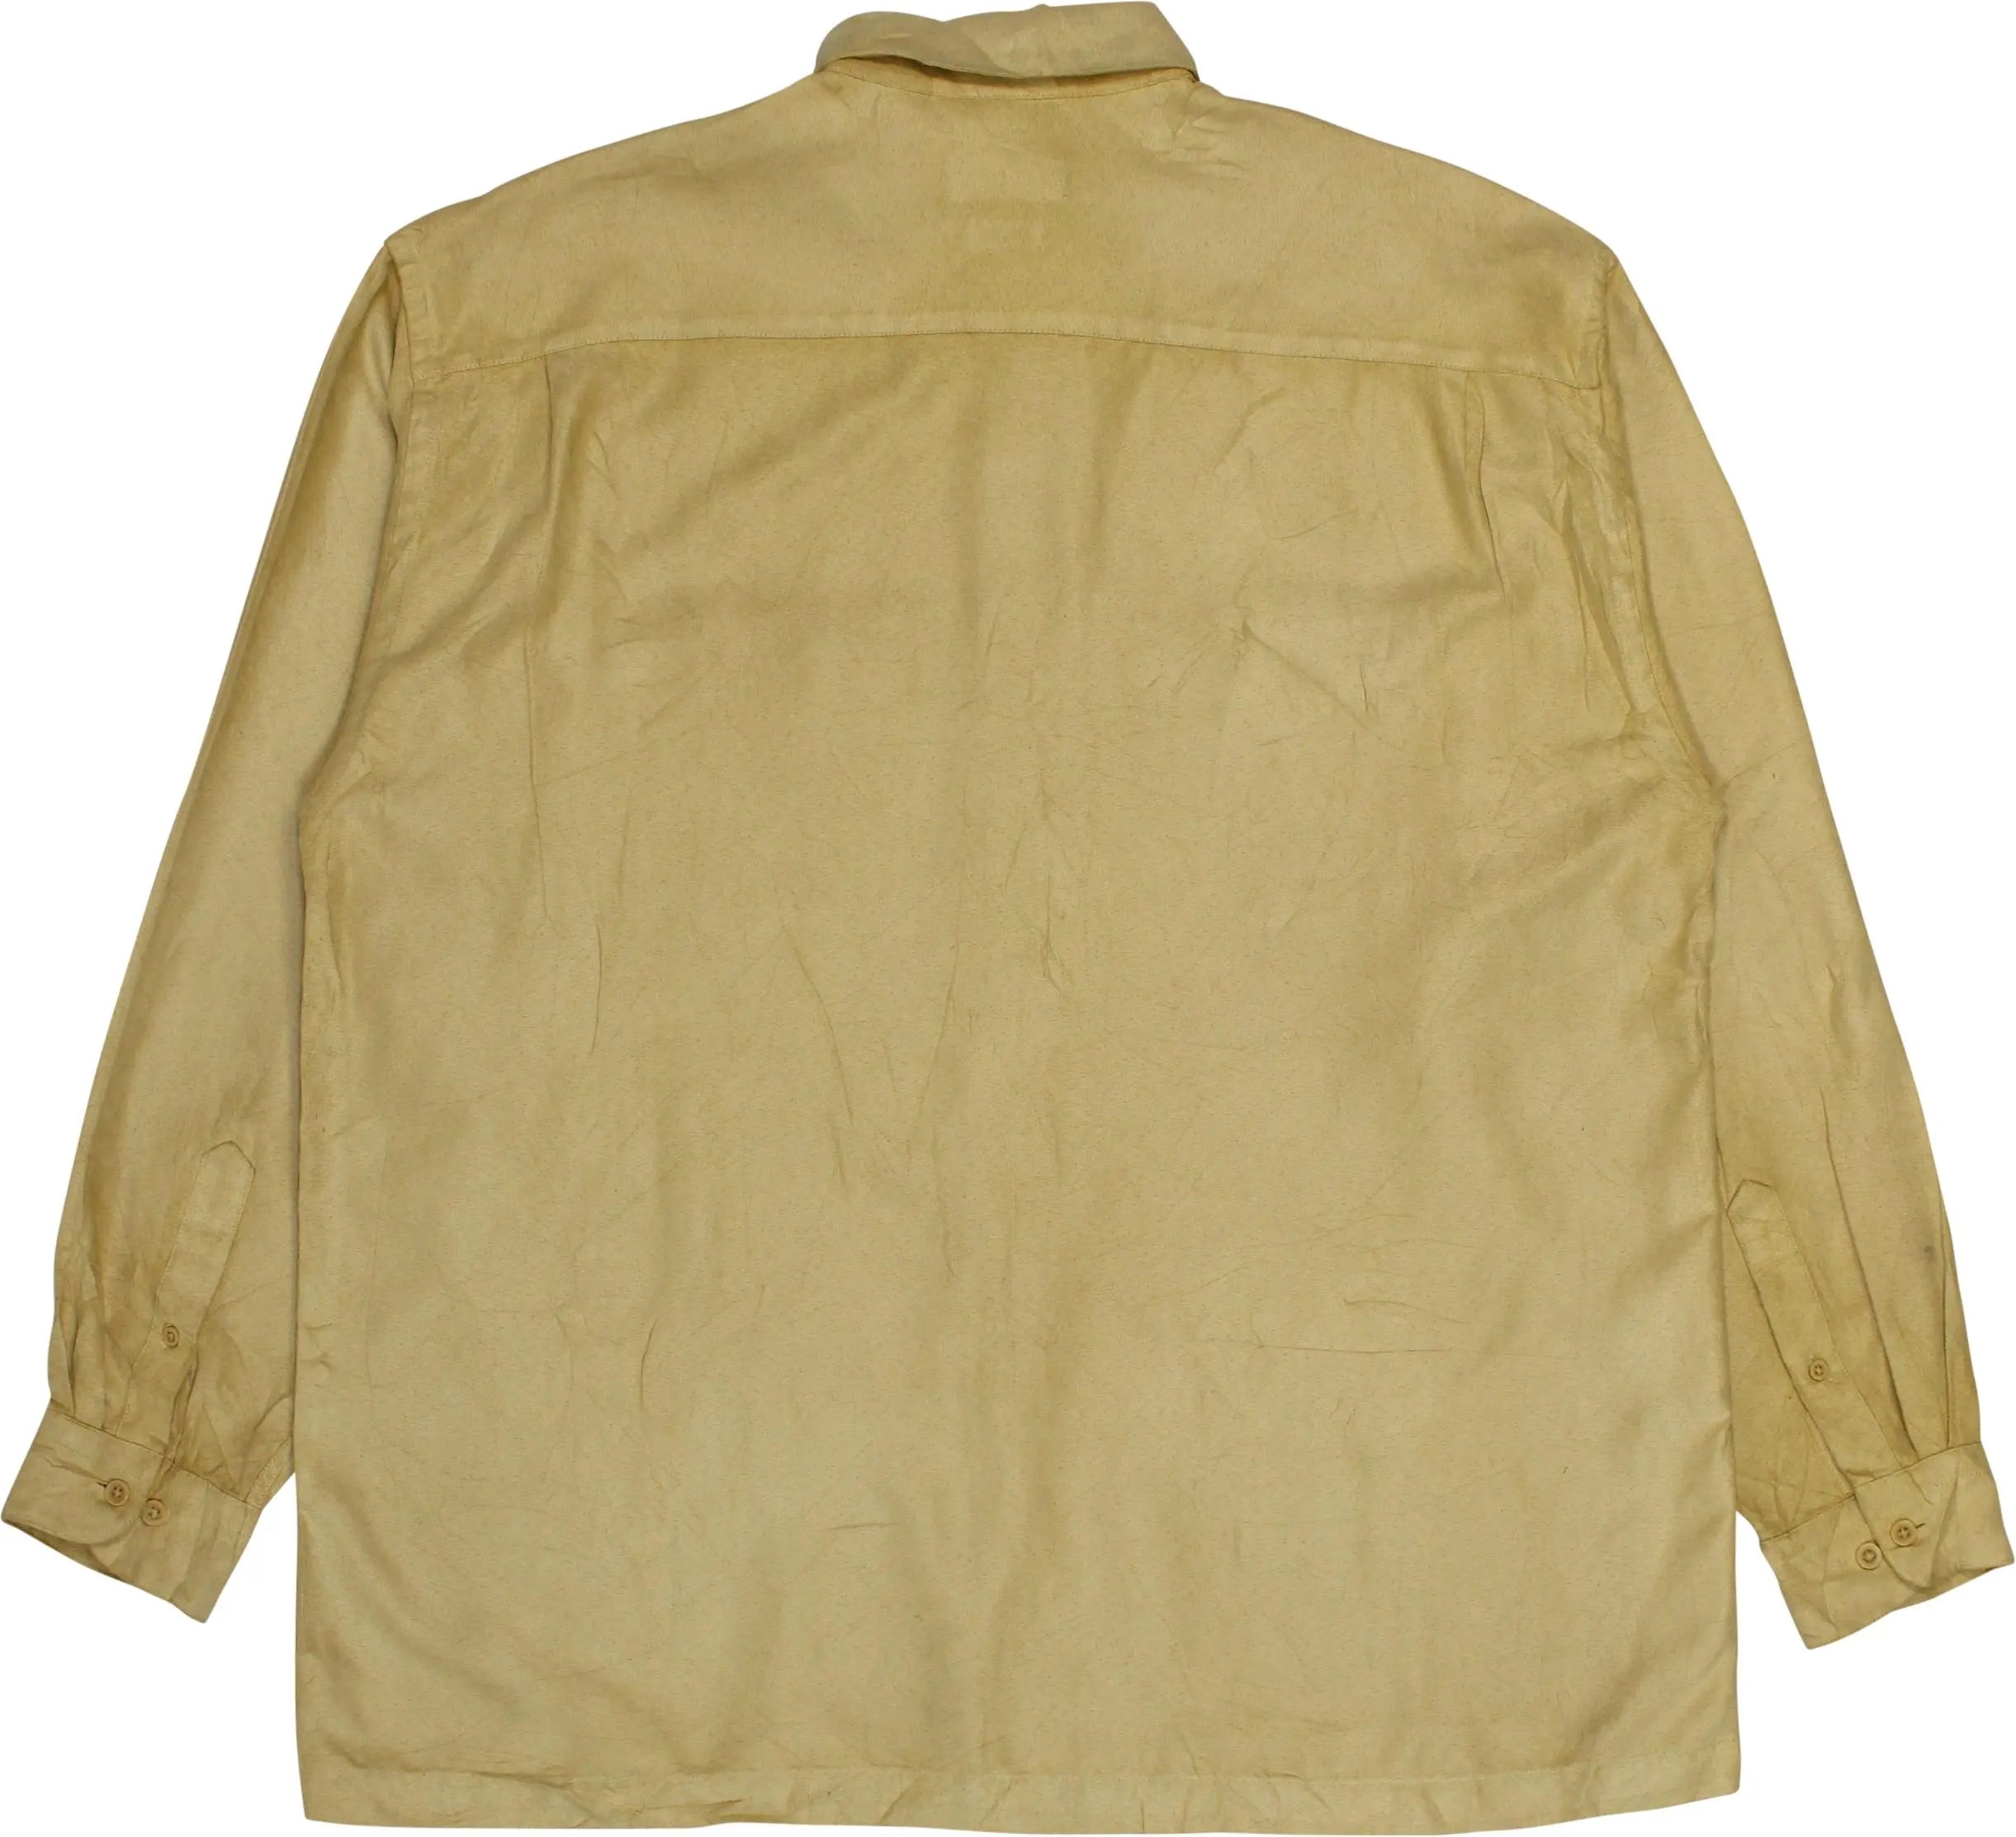 Van Heusen - Beige Shirt- ThriftTale.com - Vintage and second handclothing